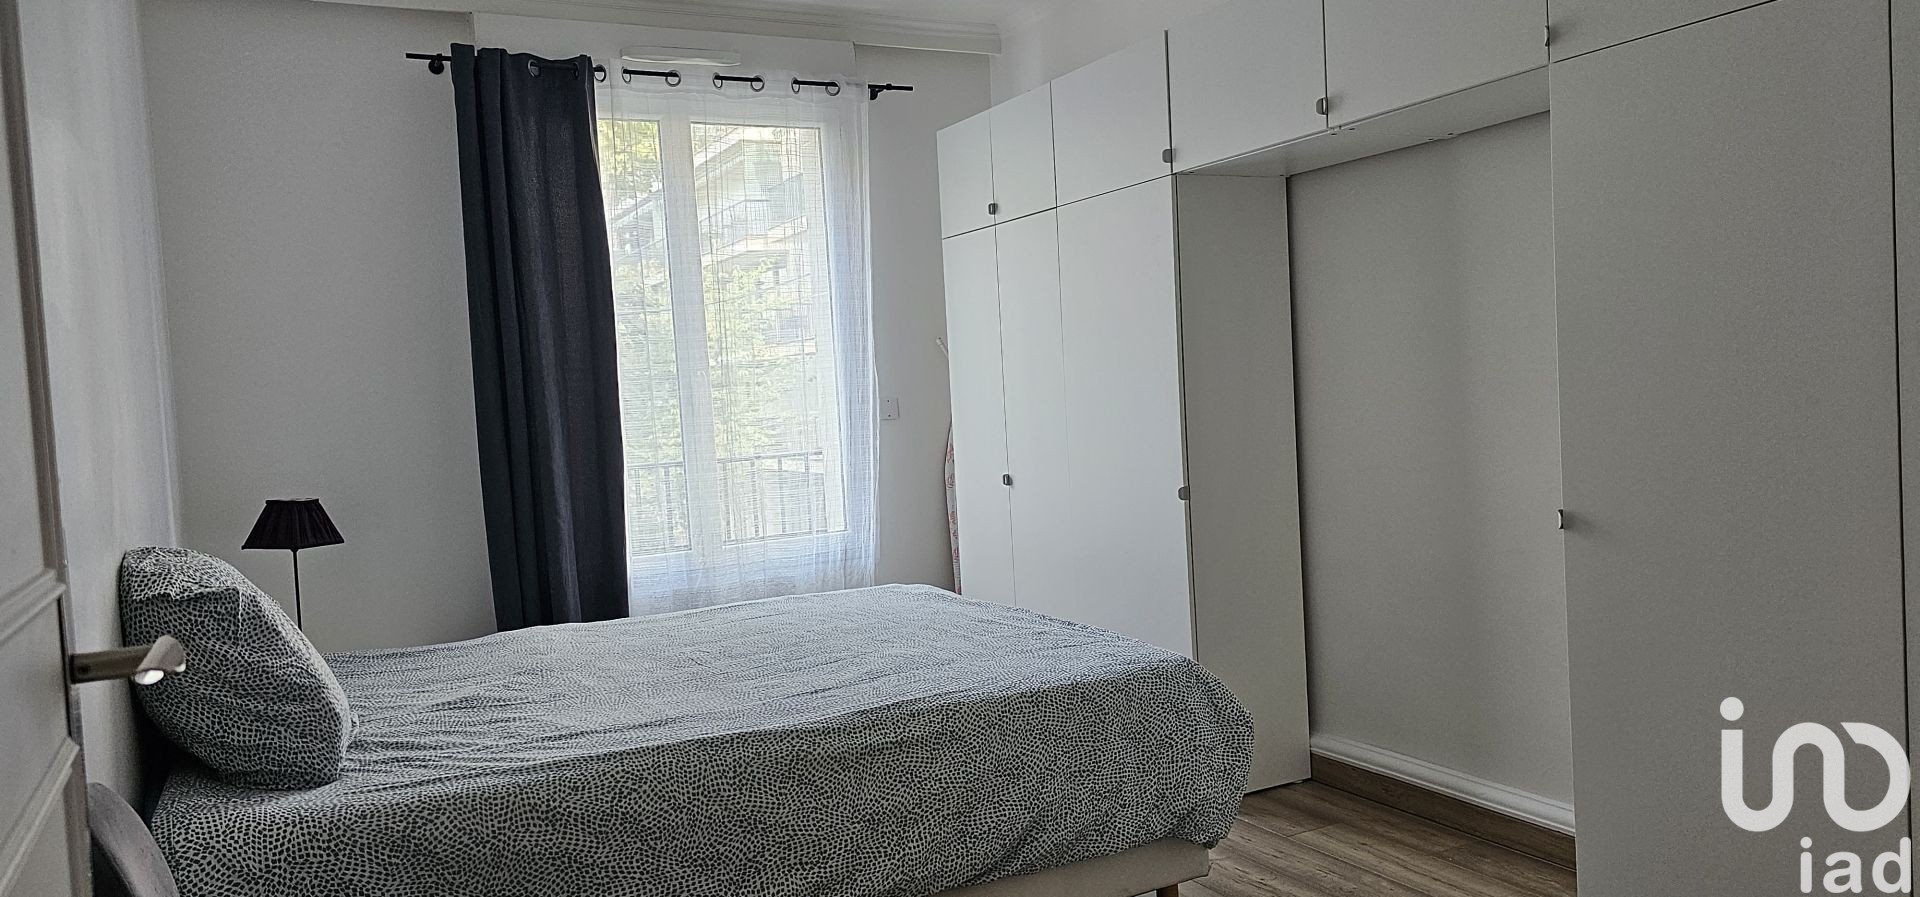 Appartement a louer neuilly-sur-seine - 3 pièce(s) - 71 m2 - Surfyn